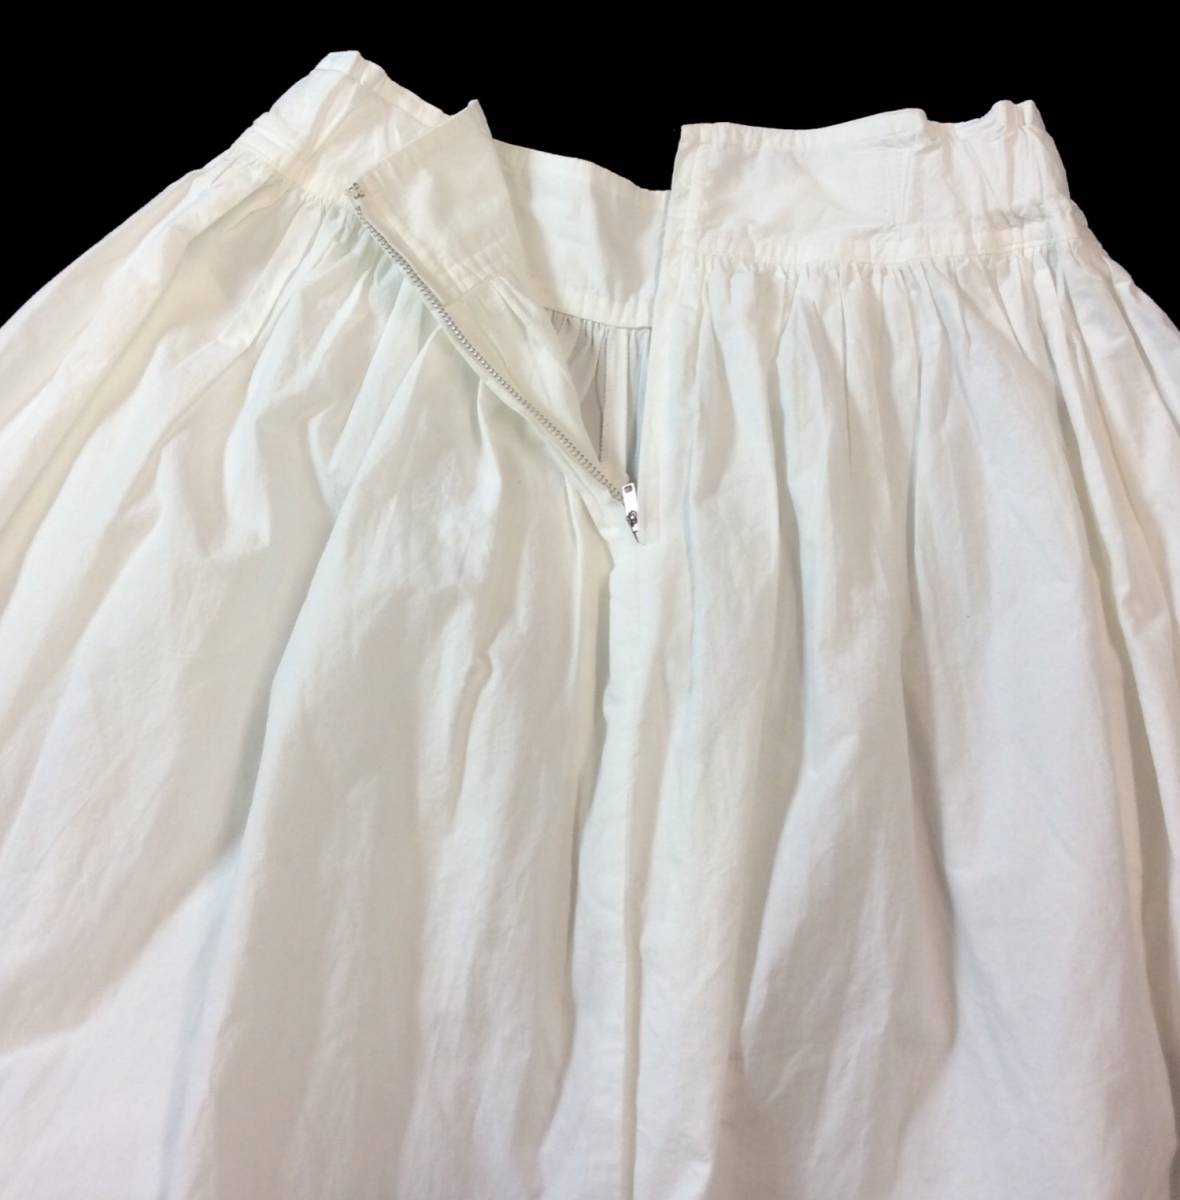 Y\'s wise Yohji Yamamoto YOHJI YAMAMOTOgya The - flair юбка длинный белый хлопок с карманом женский 2 (ma)